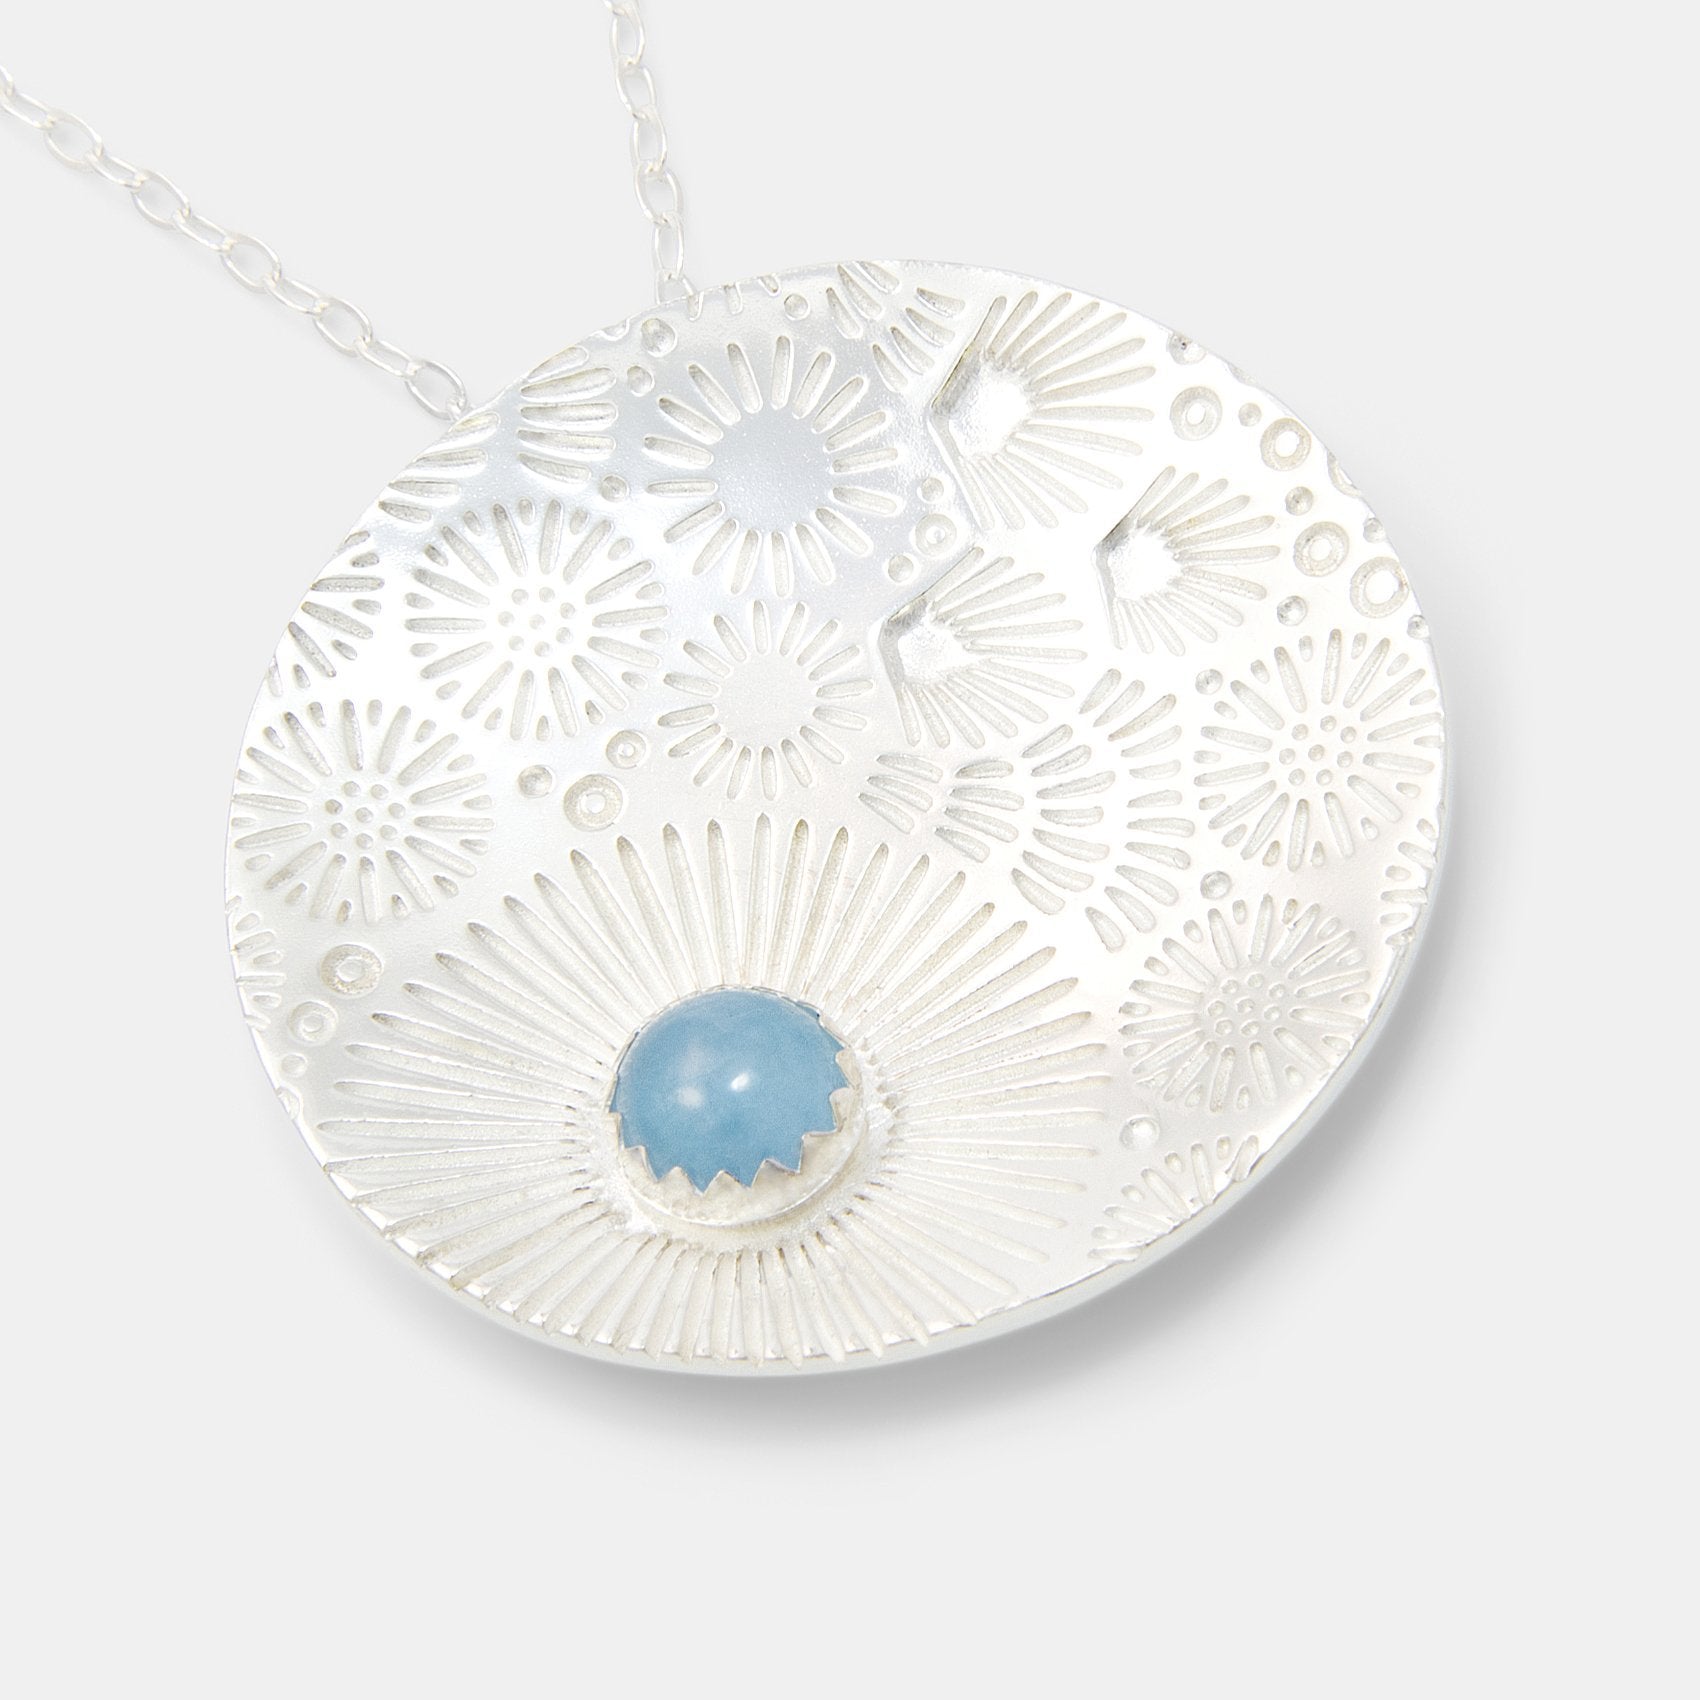 Coral reef & aquamarine pendant necklace - Simone Walsh Jewellery Australia